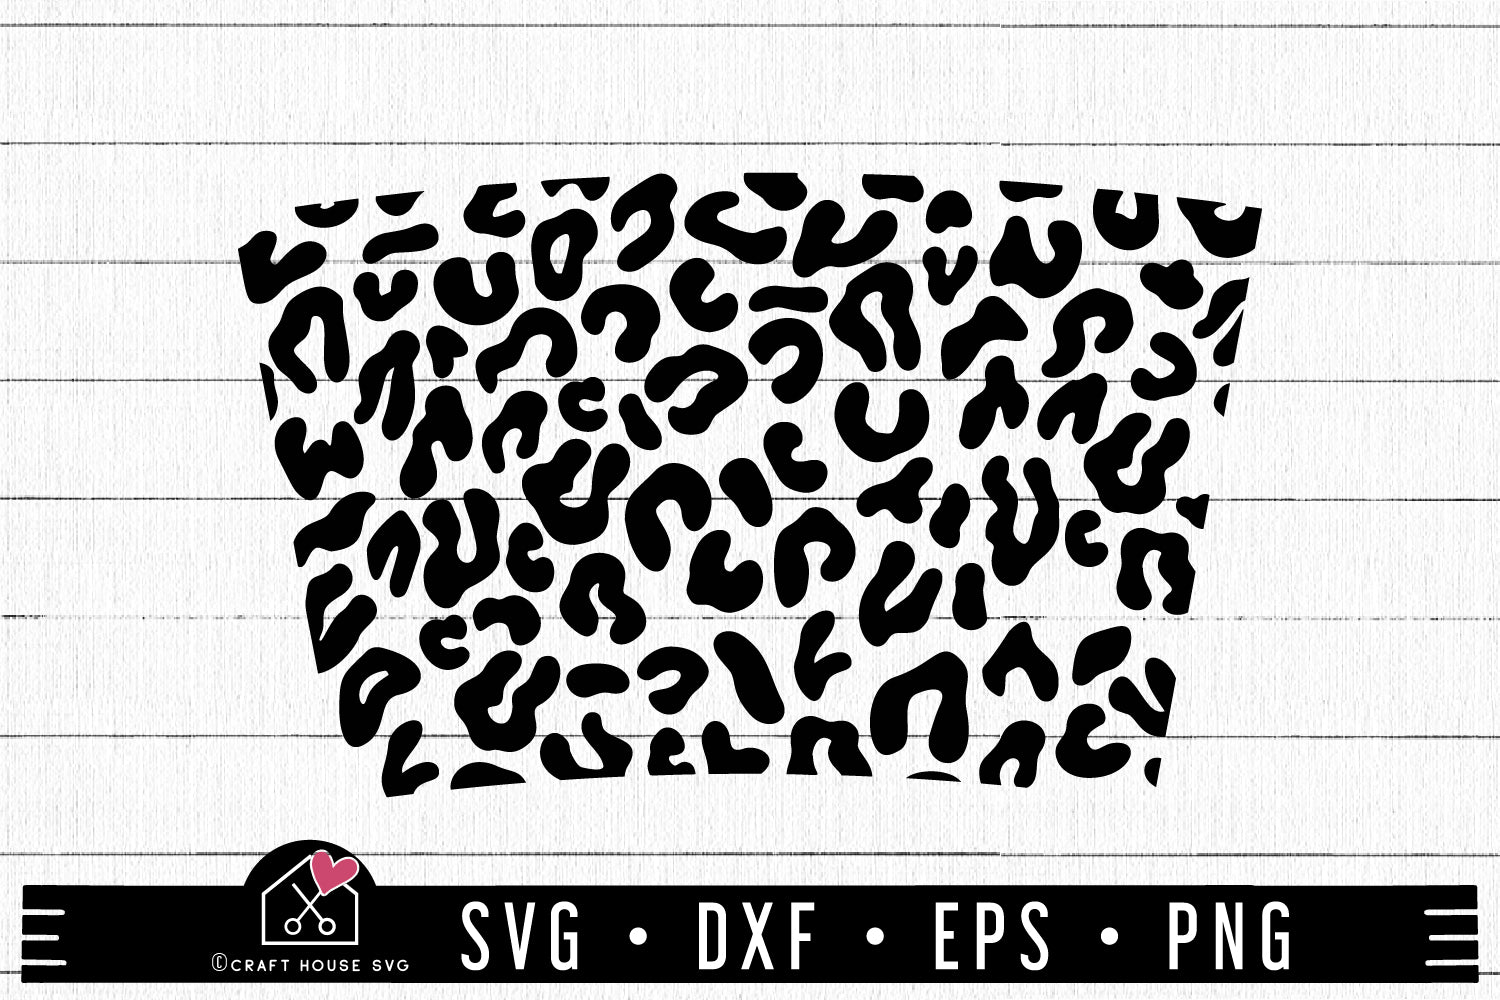 Leopard Print Leopard Spots Svg, Png, Dxf and Eps 4 Formats Vector